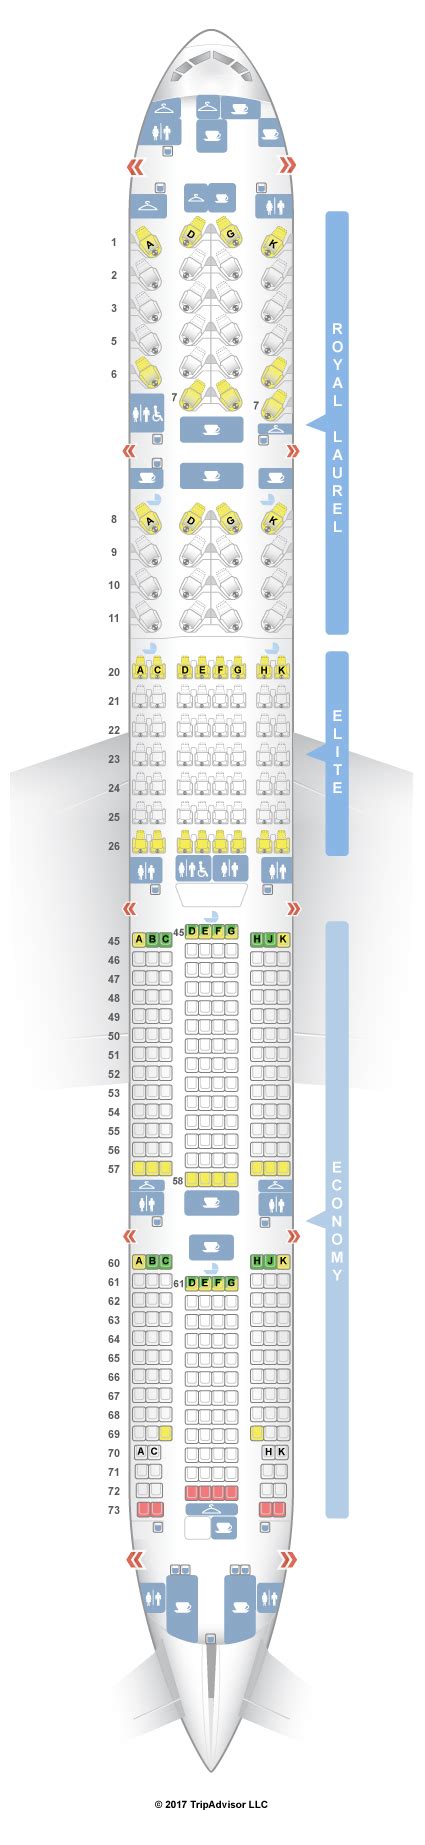 Seatguru Seat Map Eva Air Boeing 777 300er 77b V4